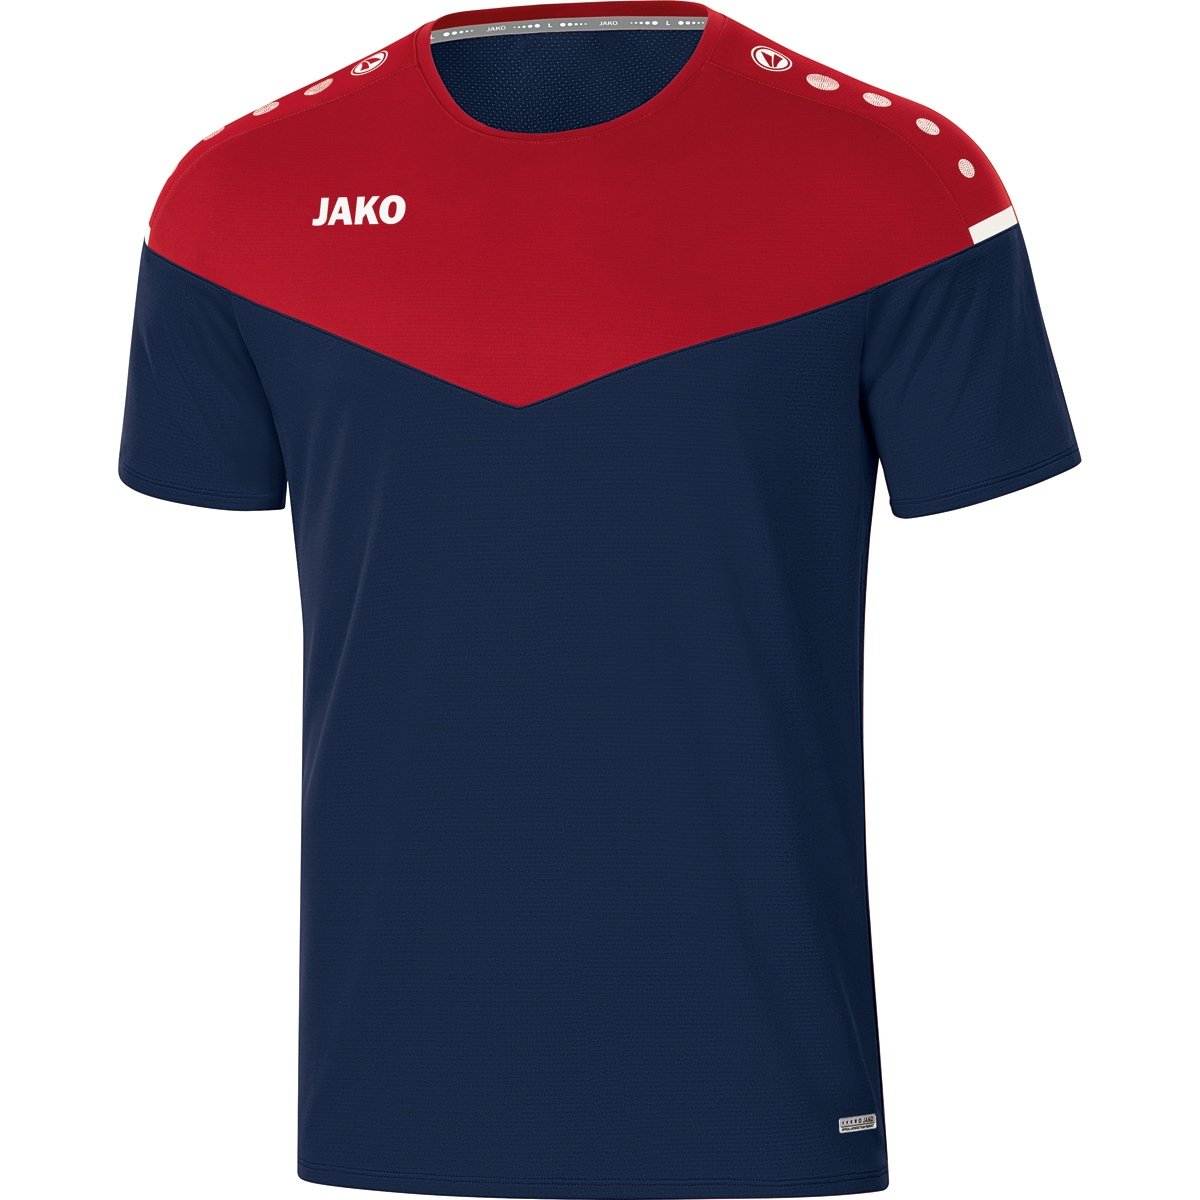 JAKO T-Shirt Champ 2.0 marine/chili 4XL, Gr. 6120 Herren, rot